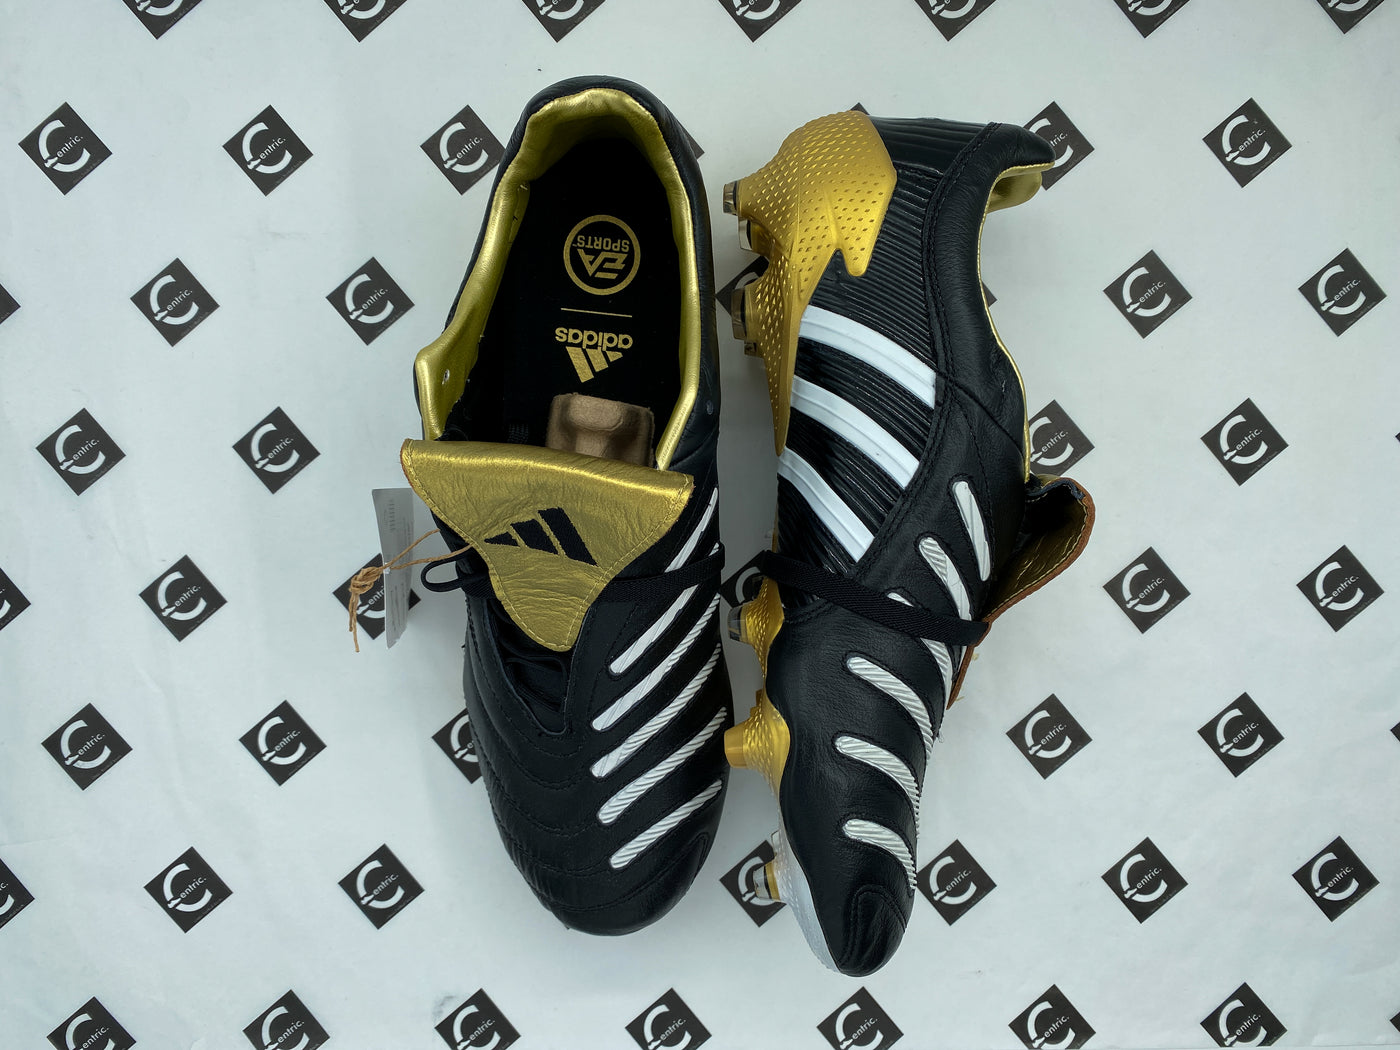 Adidas Predator Pulse x EA Sports "Legends Pack" Remake FG GOLD